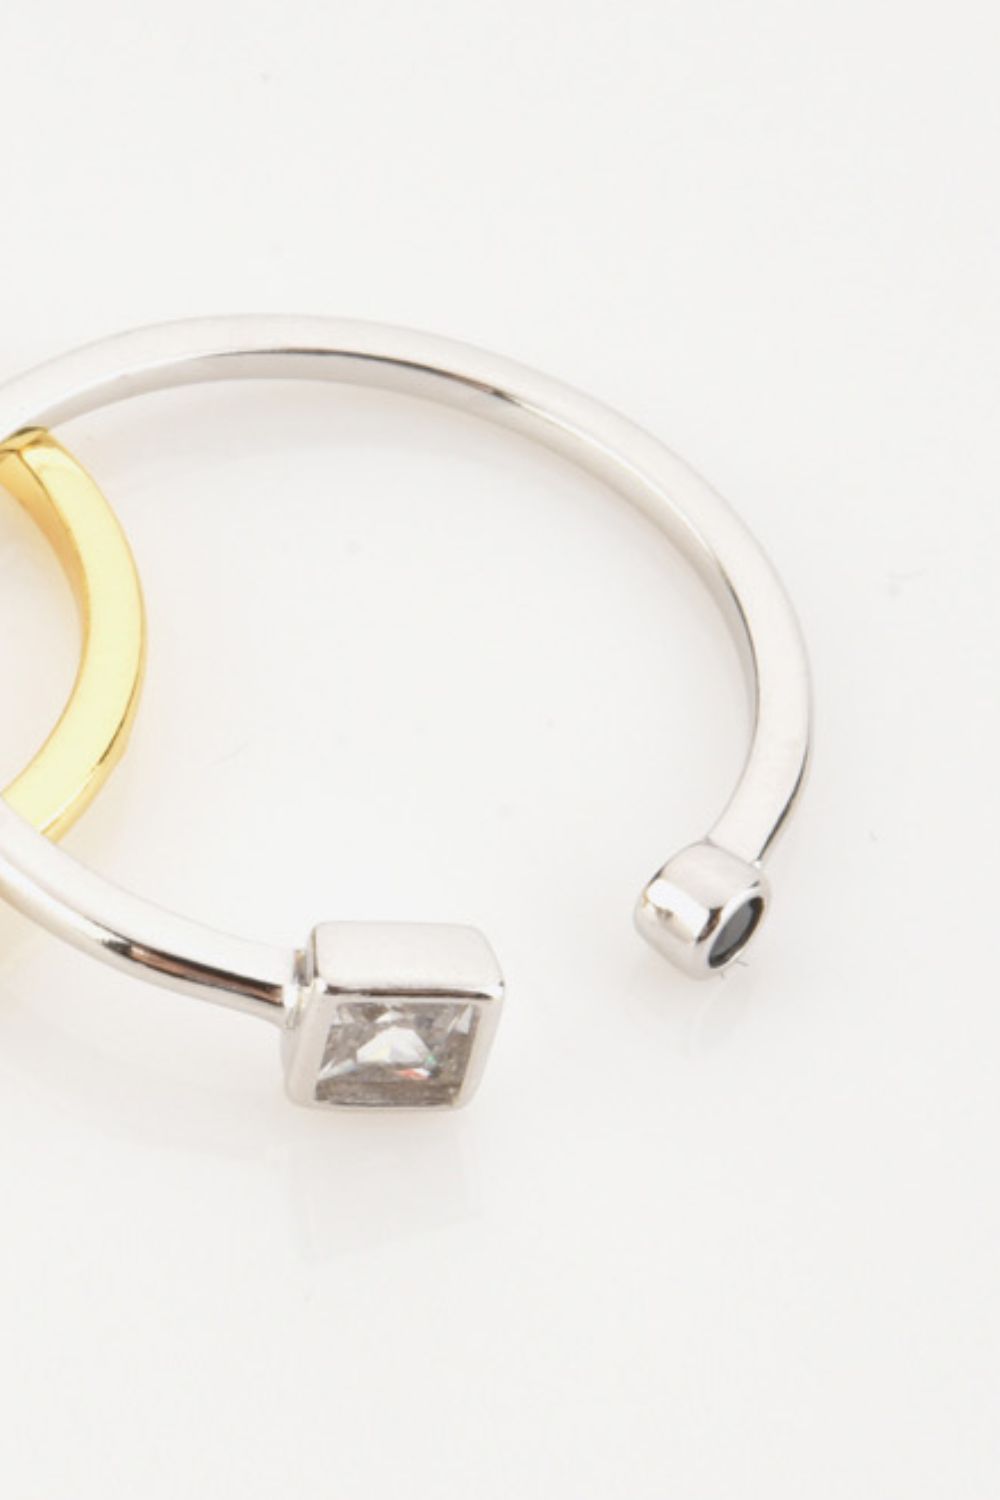 White Smoke Zircon 925 Sterling Silver Open Ring Sentient Beauty Fashions jewelry